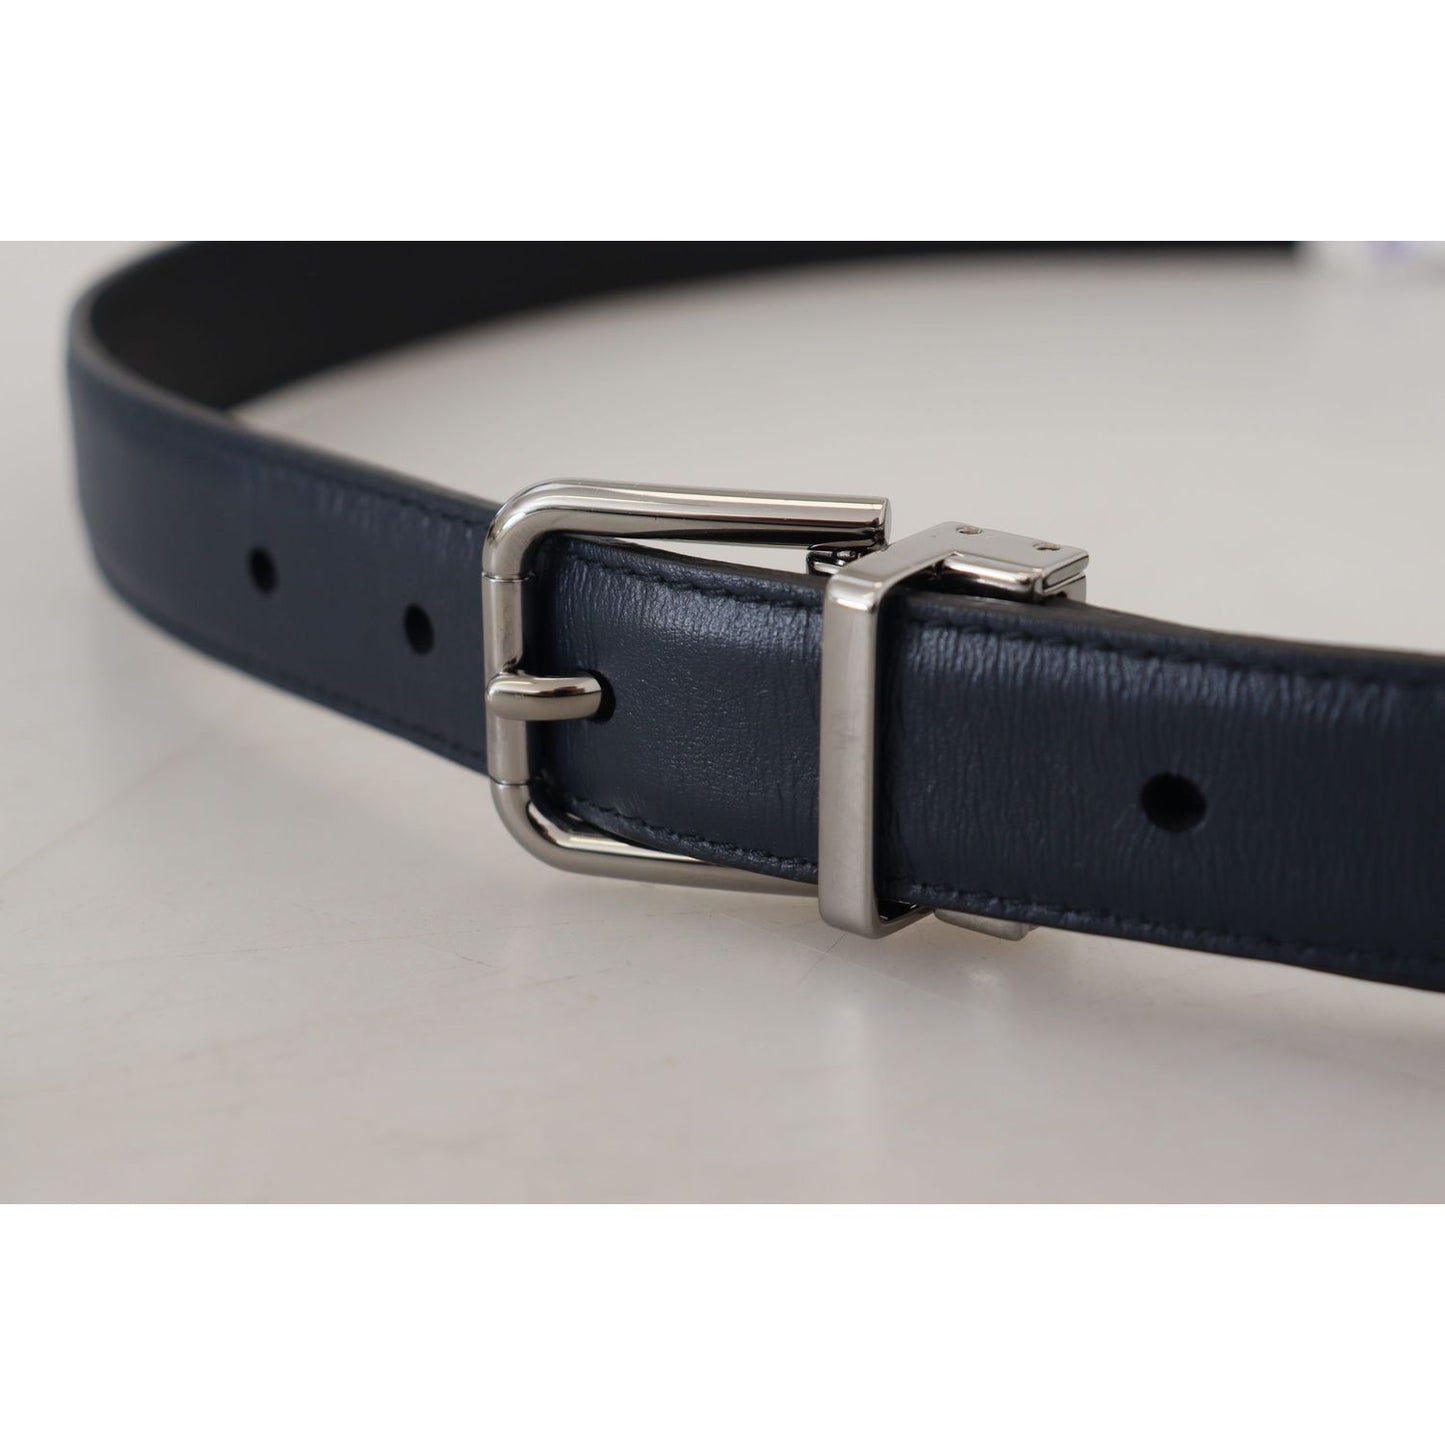 Dolce & Gabbana Elegant Blue Calf Leather Belt blue-calf-leather-silver-tone-metal-buckle-belt